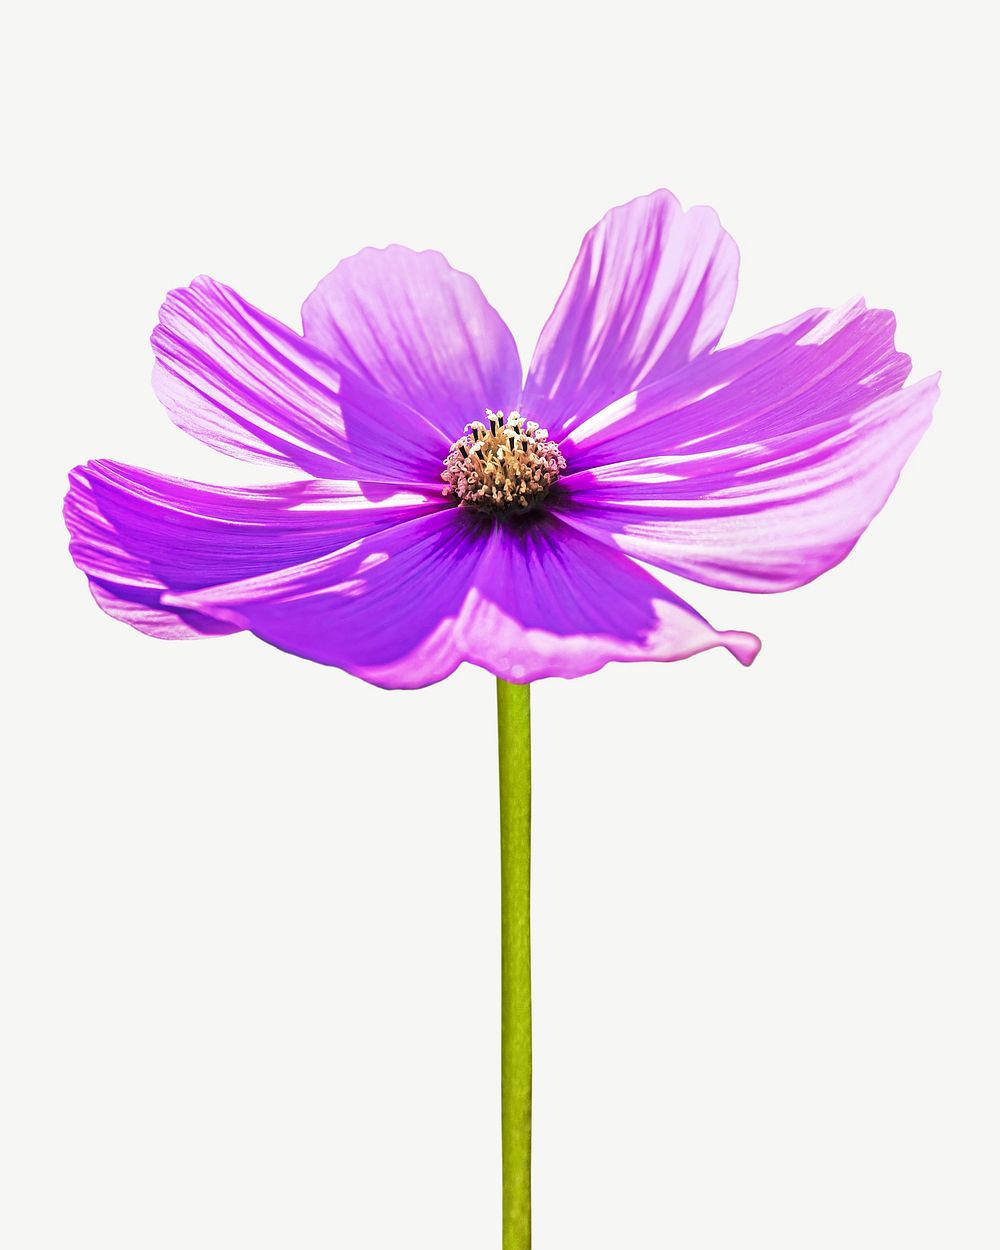 Purple cosmos flower psd